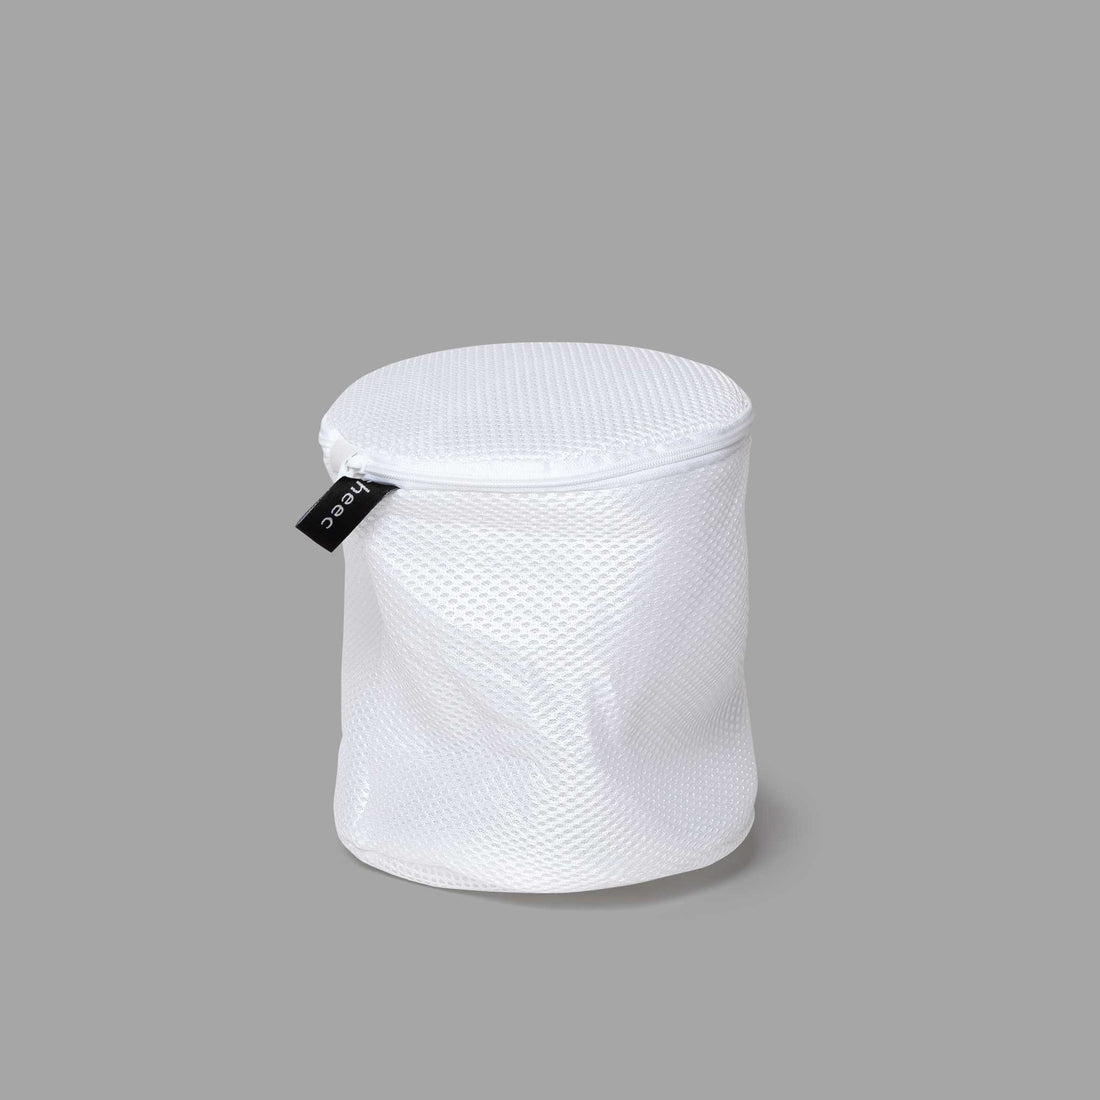 Mesh Lingerie Bag Silicone Bra Washing Bag for Washing Delicates